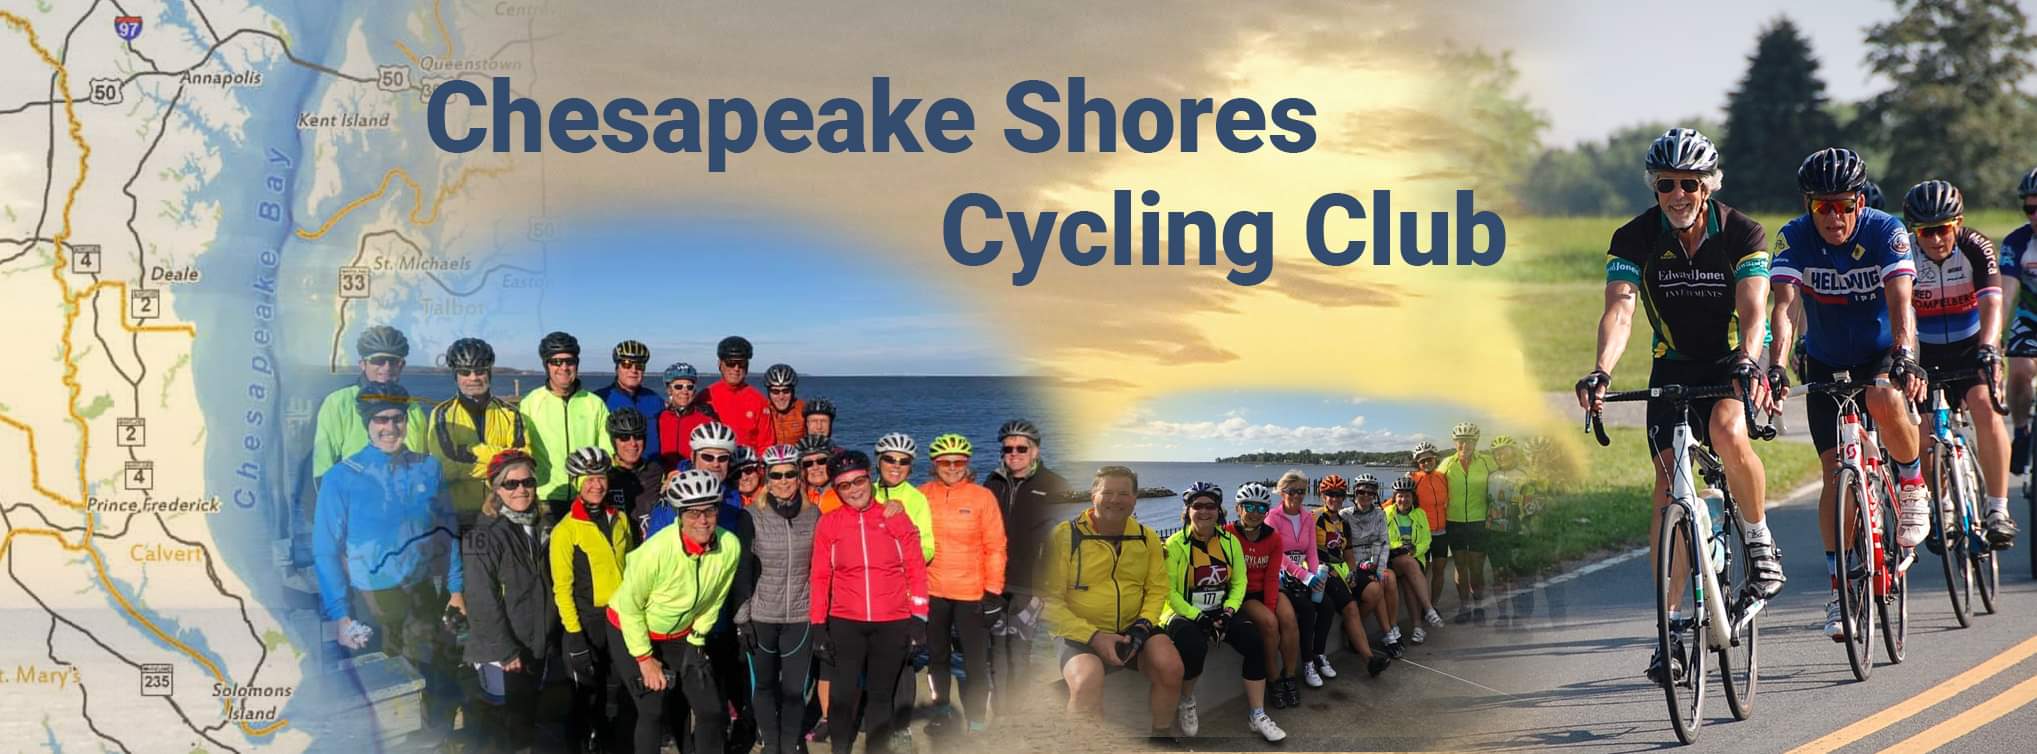 Chesapeake Shores Cycling Club